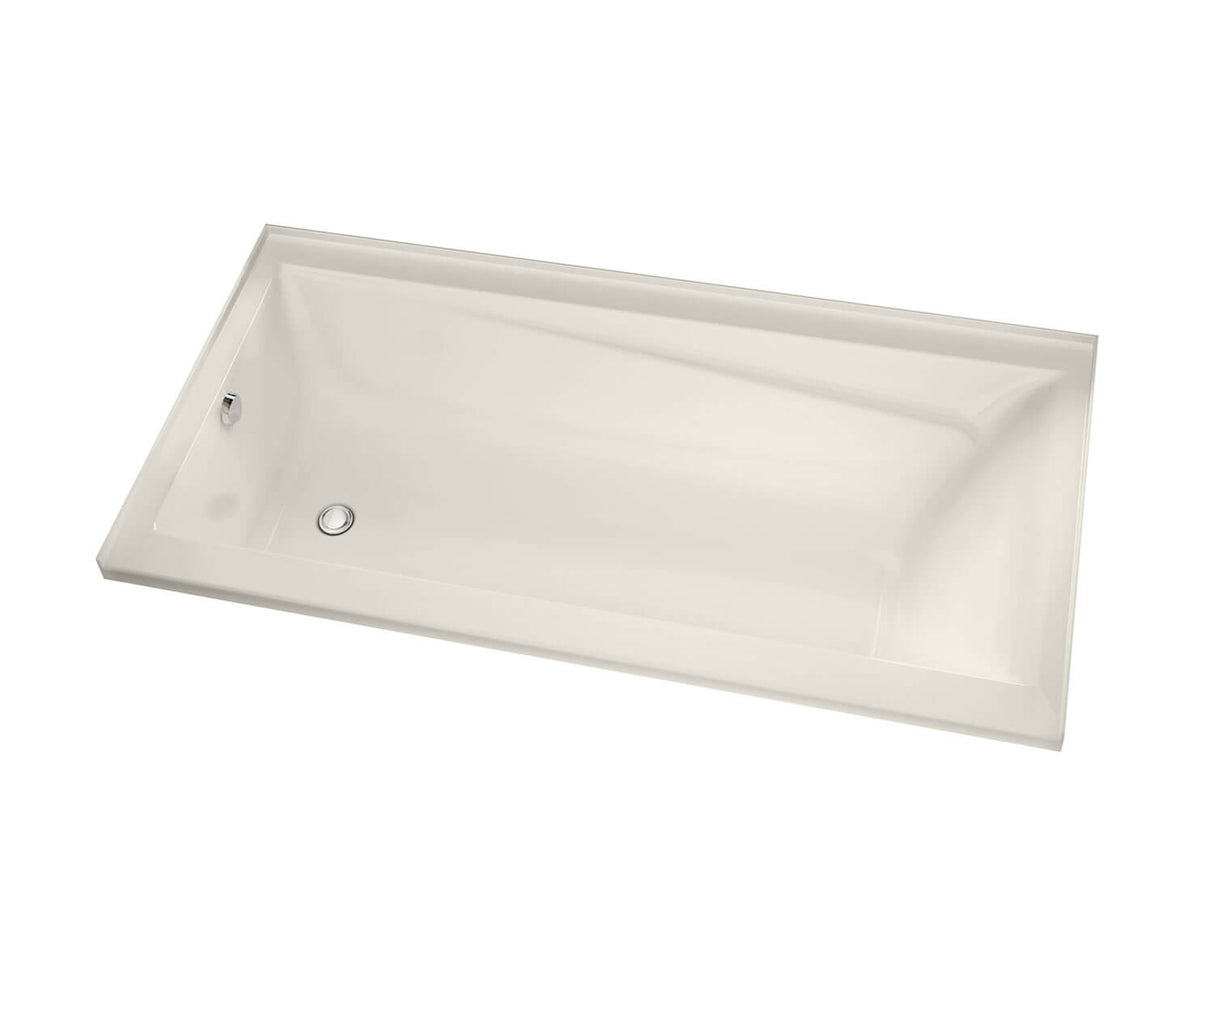 MAAX 106174-L-103-007 Exhibit 6042 IF Acrylic Alcove Left-Hand Drain Aeroeffect Bathtub in Biscuit